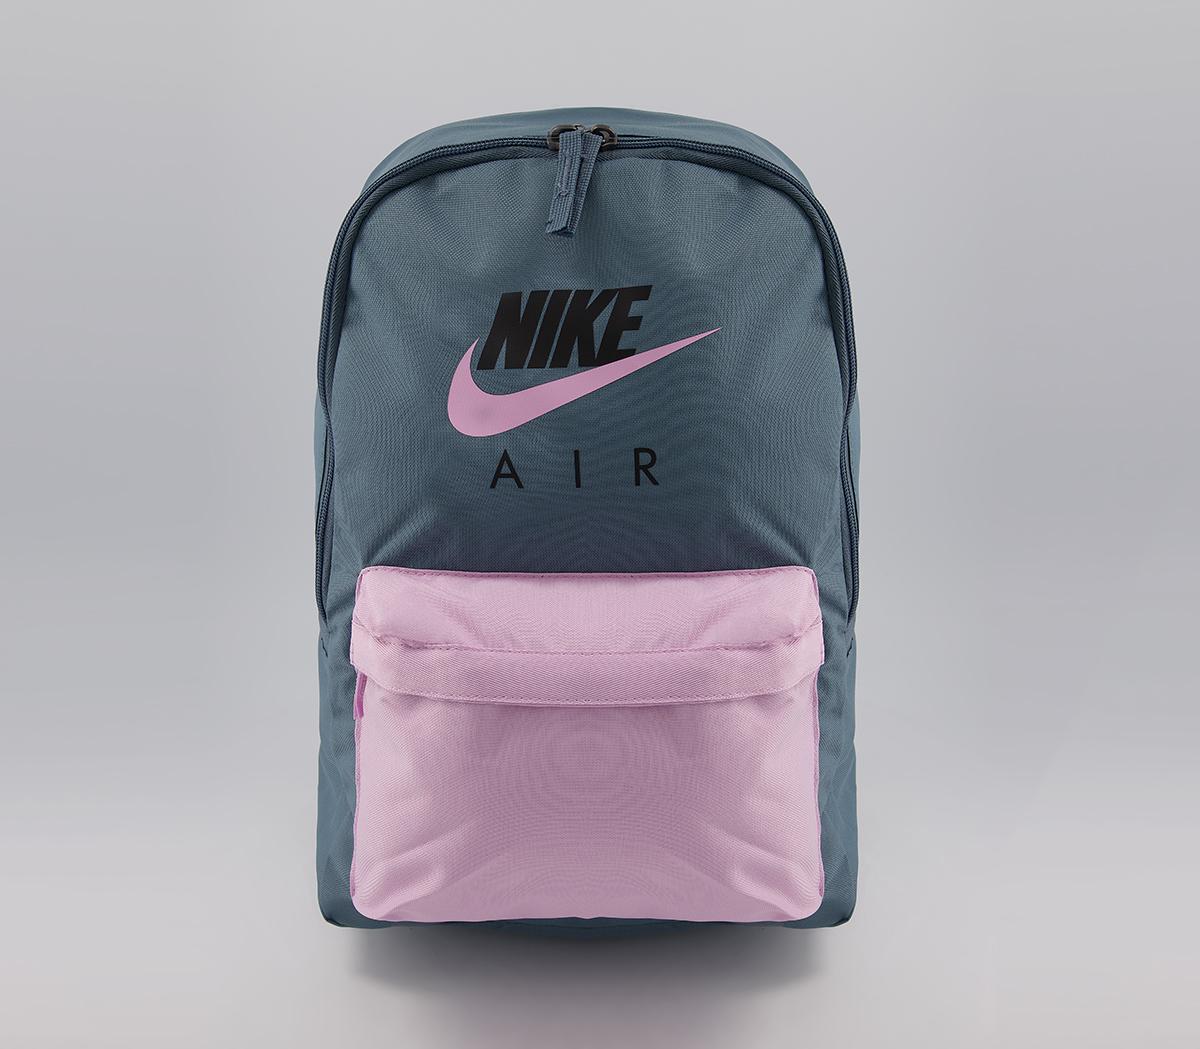 NikeHeritage BackpackOzone Blue Light Artic Pink